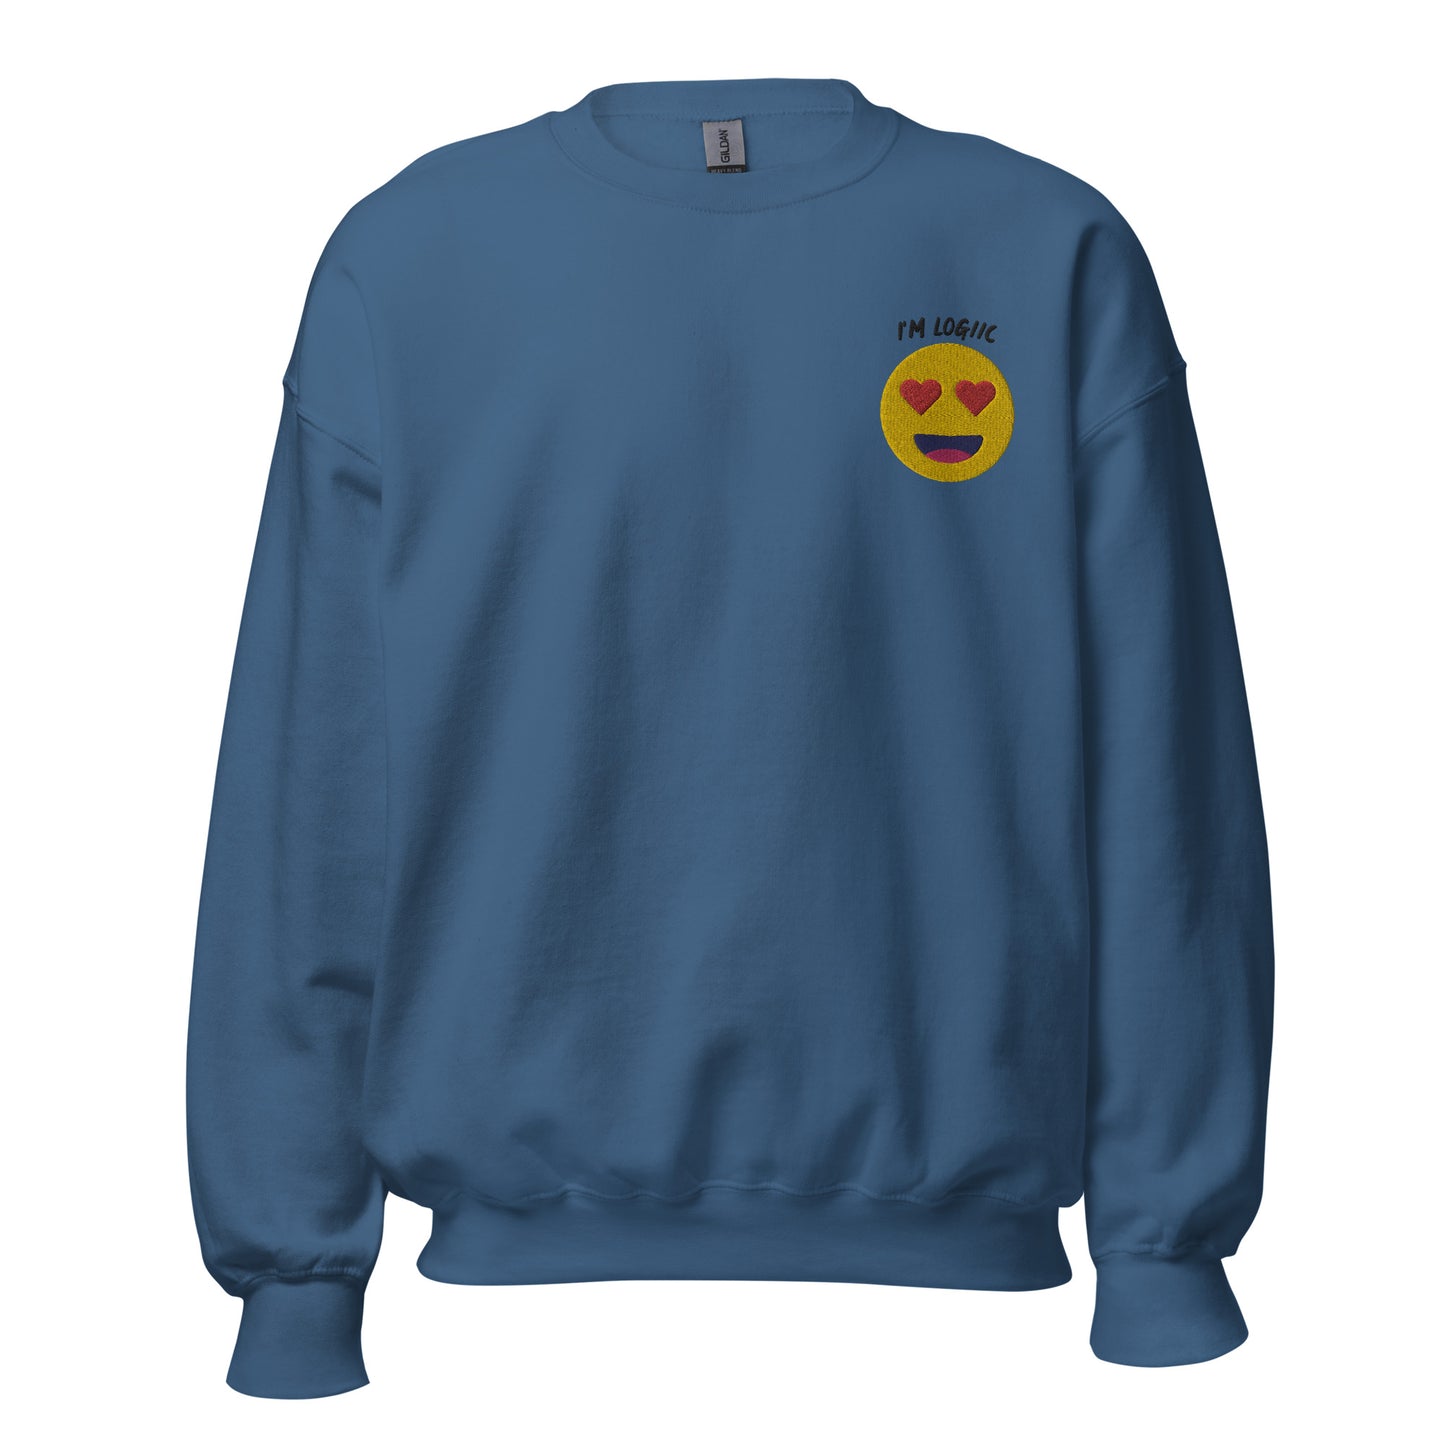 Heart Eyes Emoji Unisex Sweatshirt - Indigo Blue / S